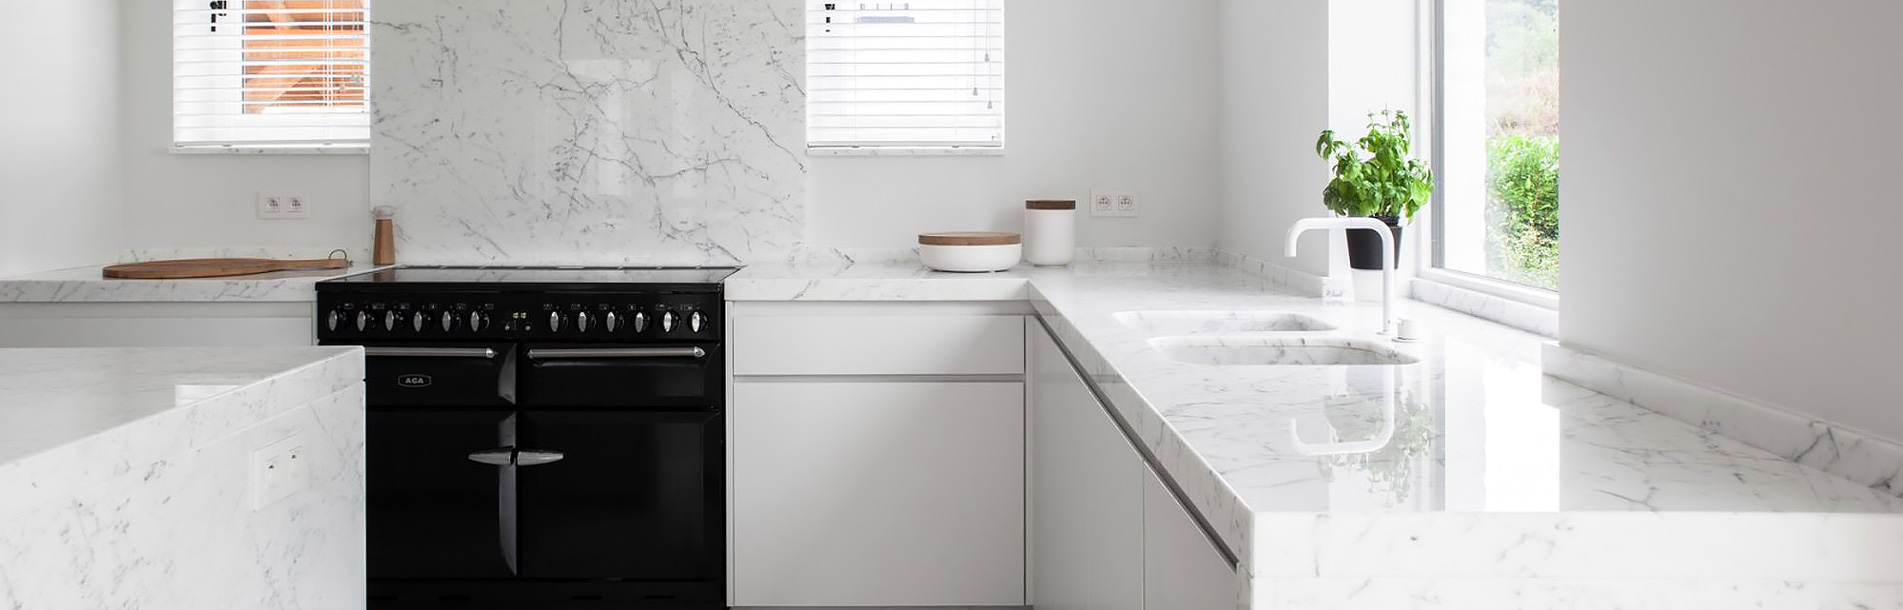 Carrara-marble-countertop-splashback-kitchen-project